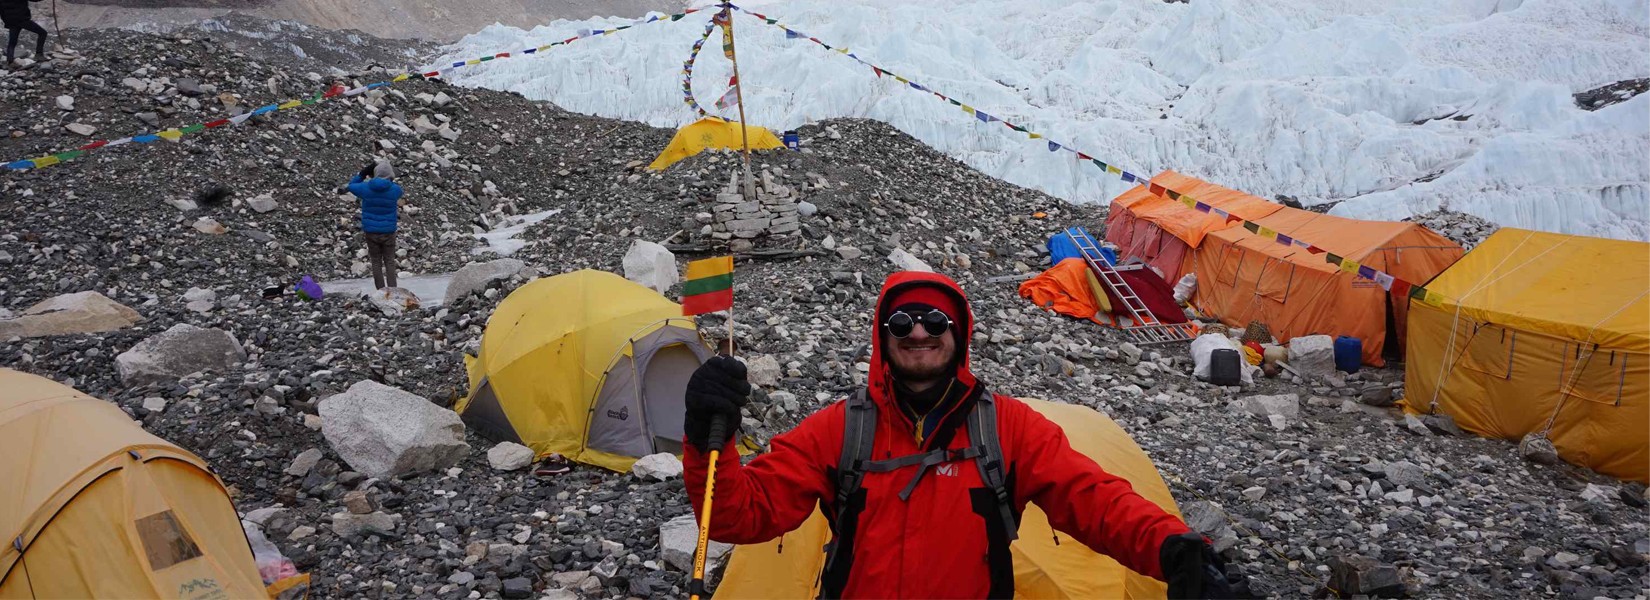 Popular Places In Everest Region Trekking